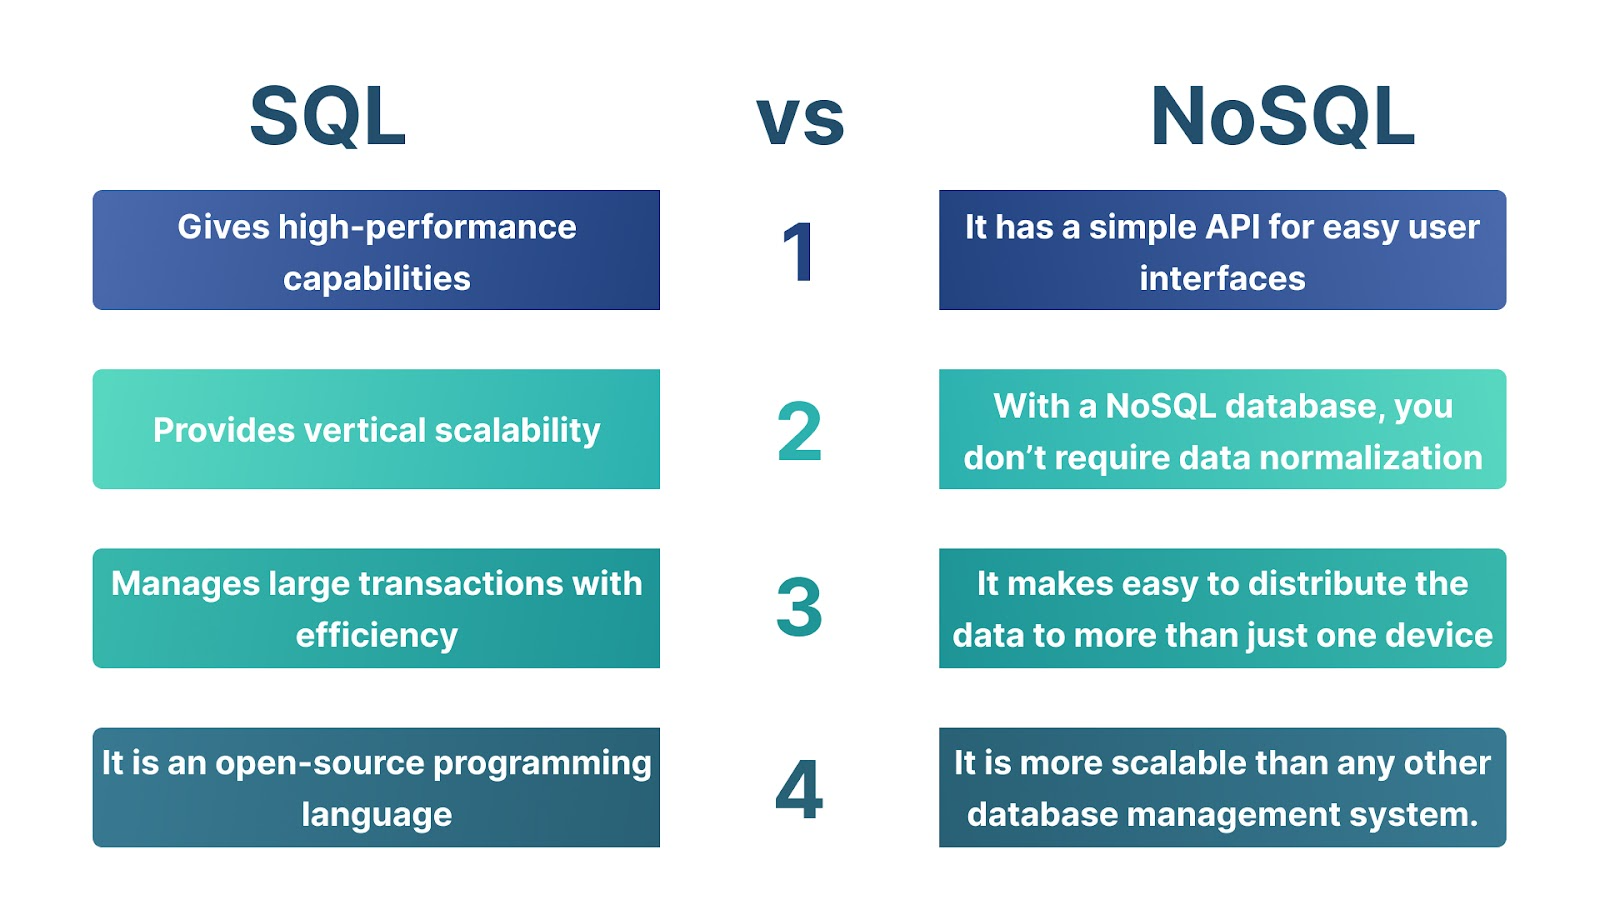 SQL versus NOSQL